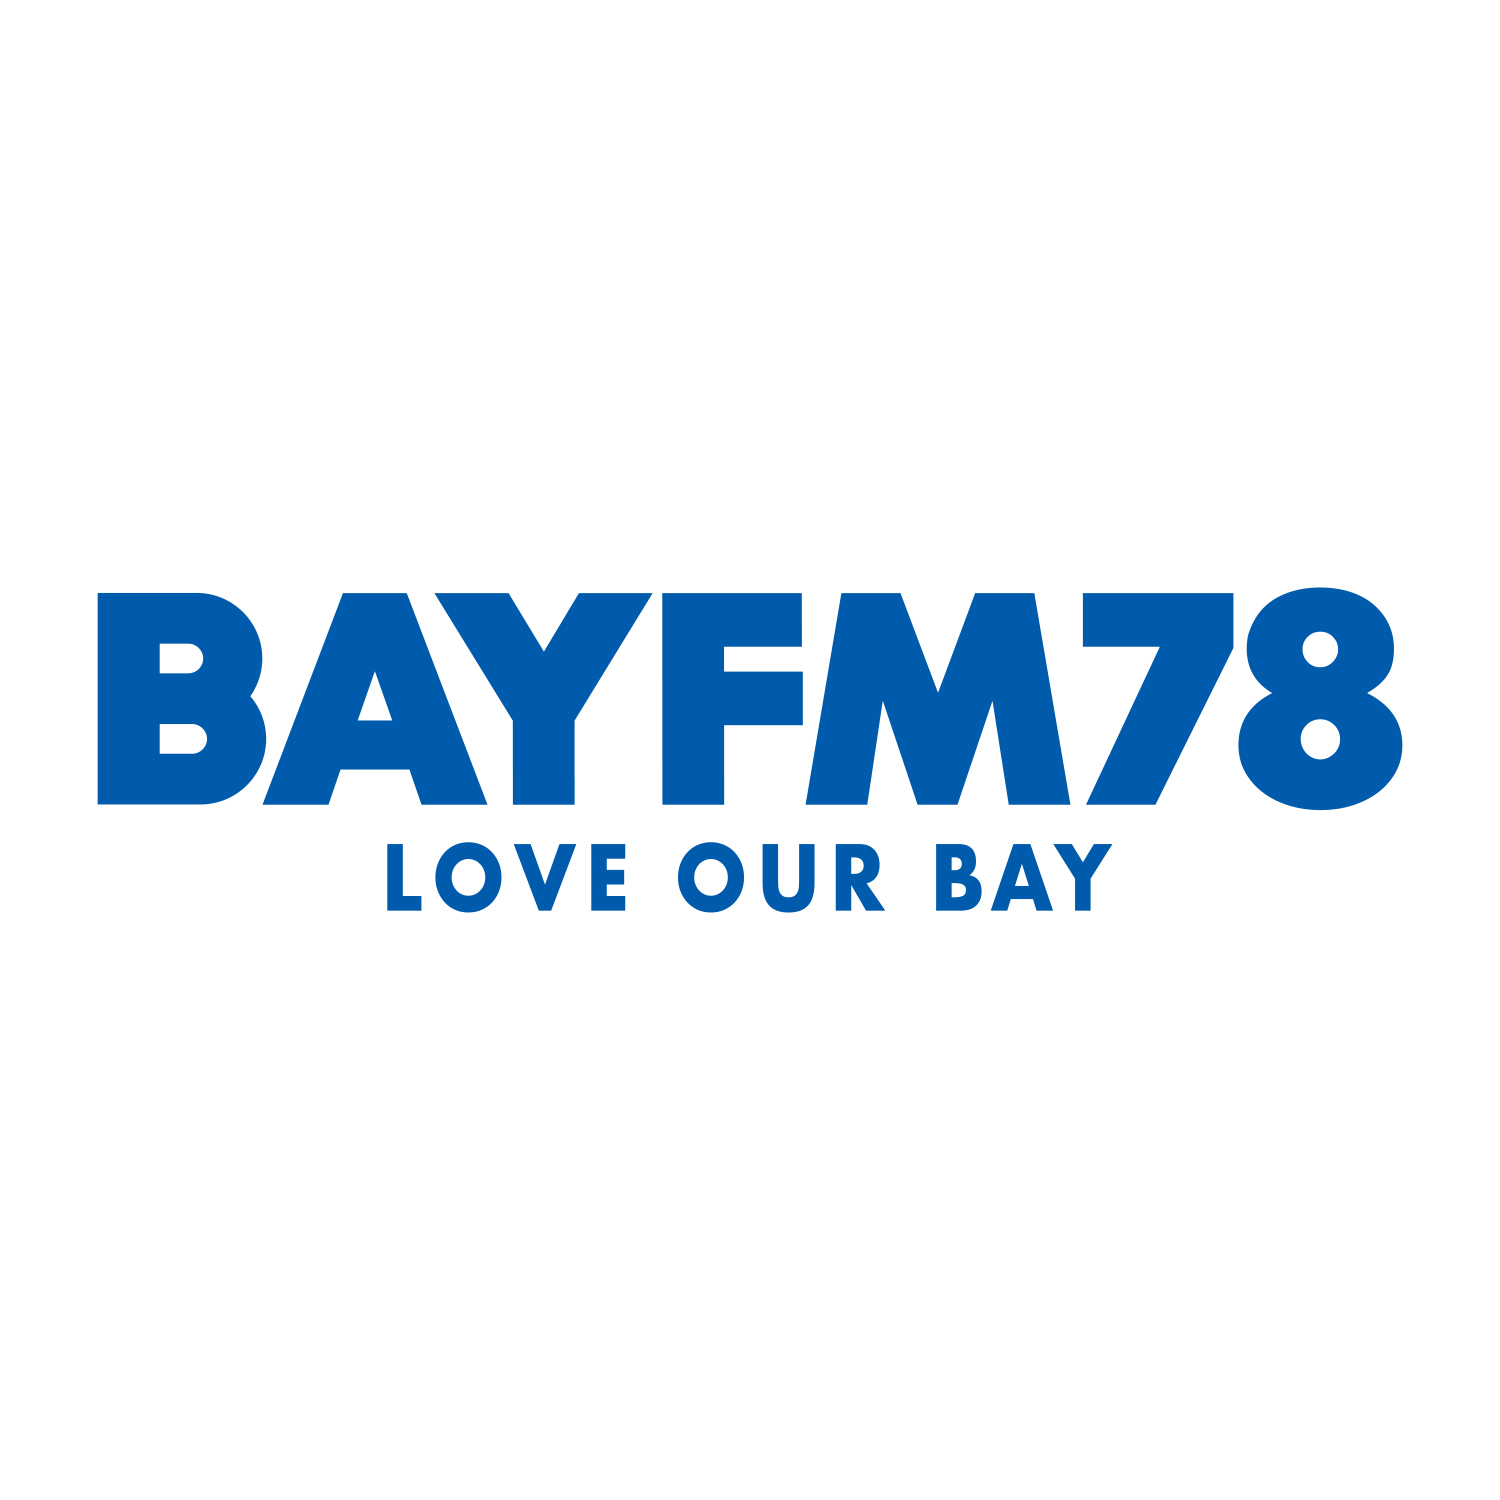 BAYFM78 ON-DEMAND